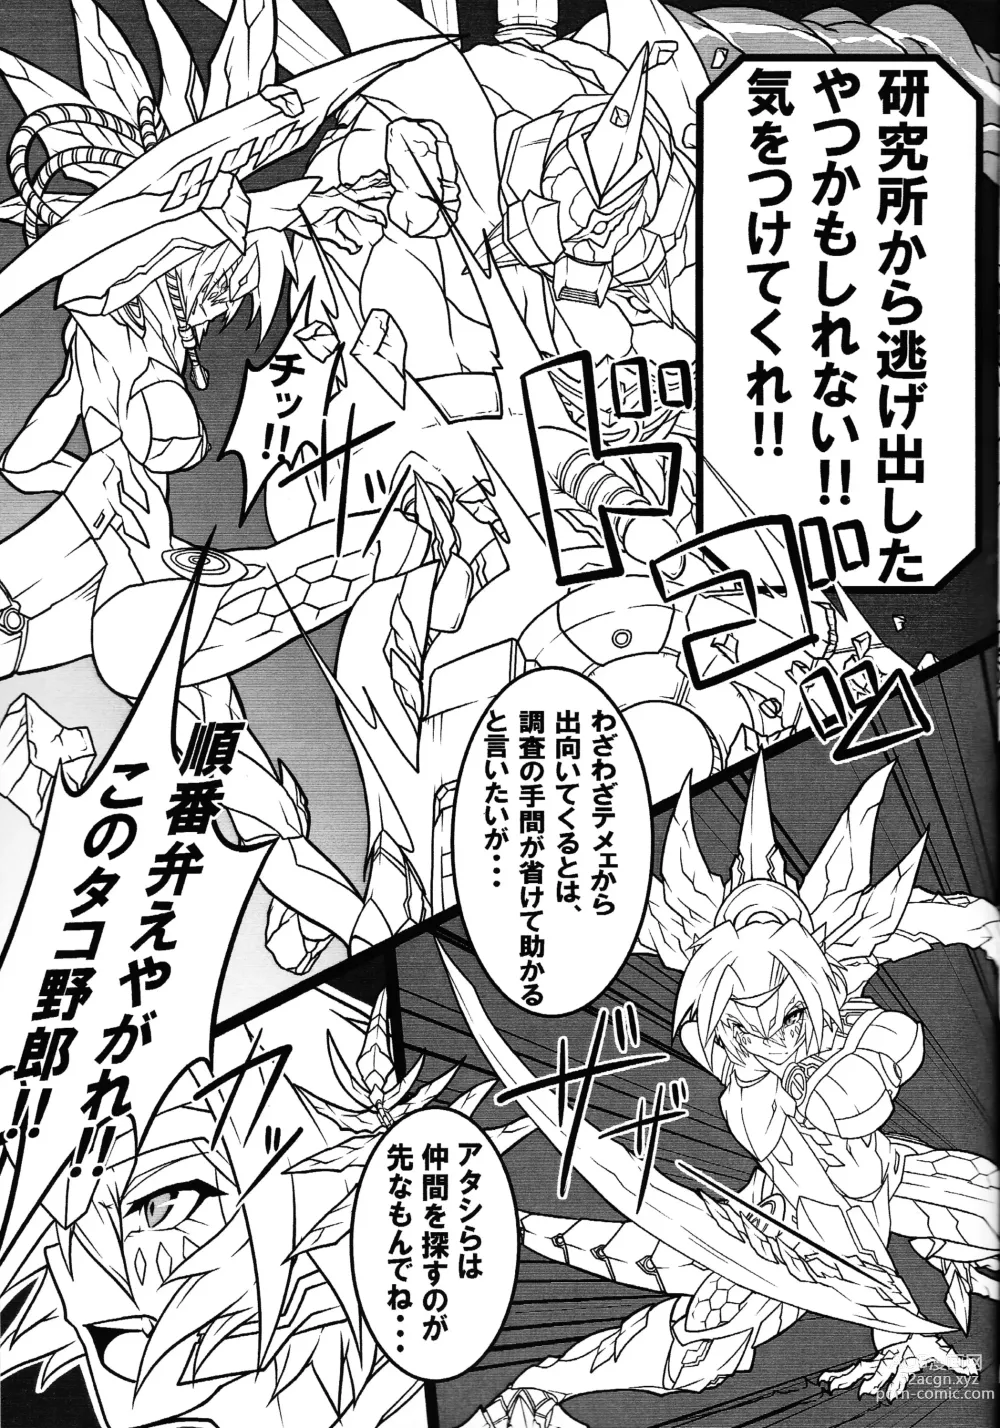 Page 6 of doujinshi Kenryu Reader